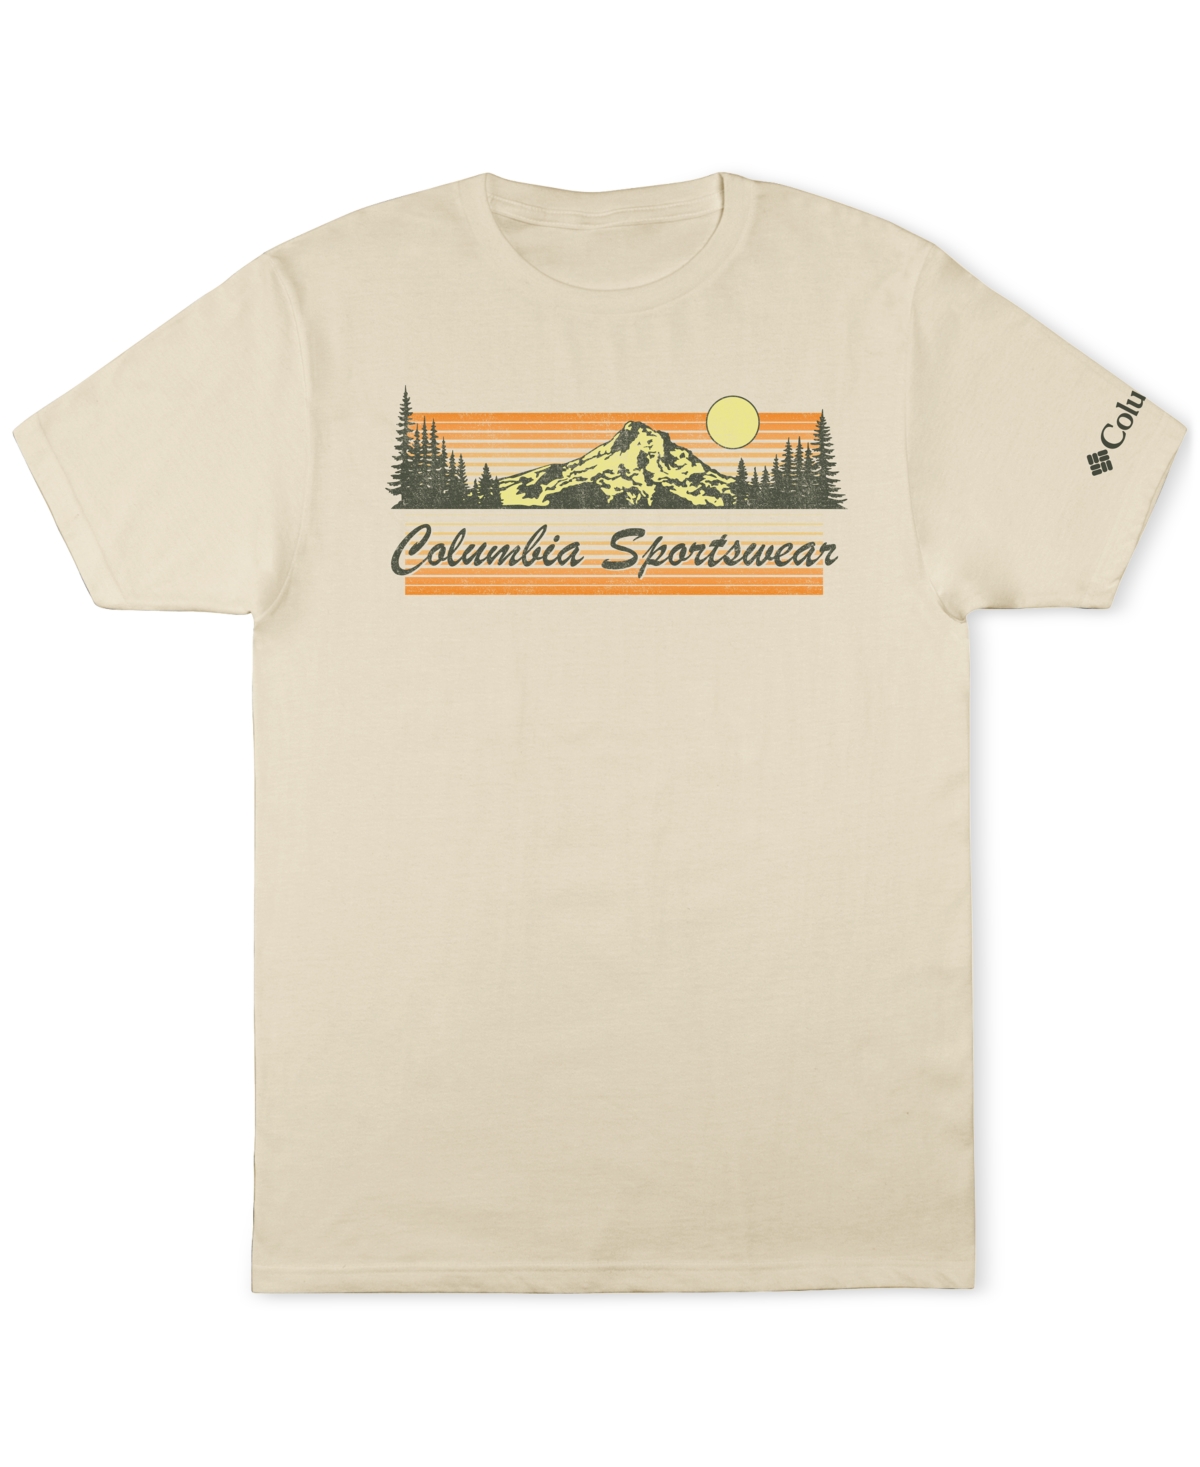 Men's Mountain Graphic T-Shirt - Chalk